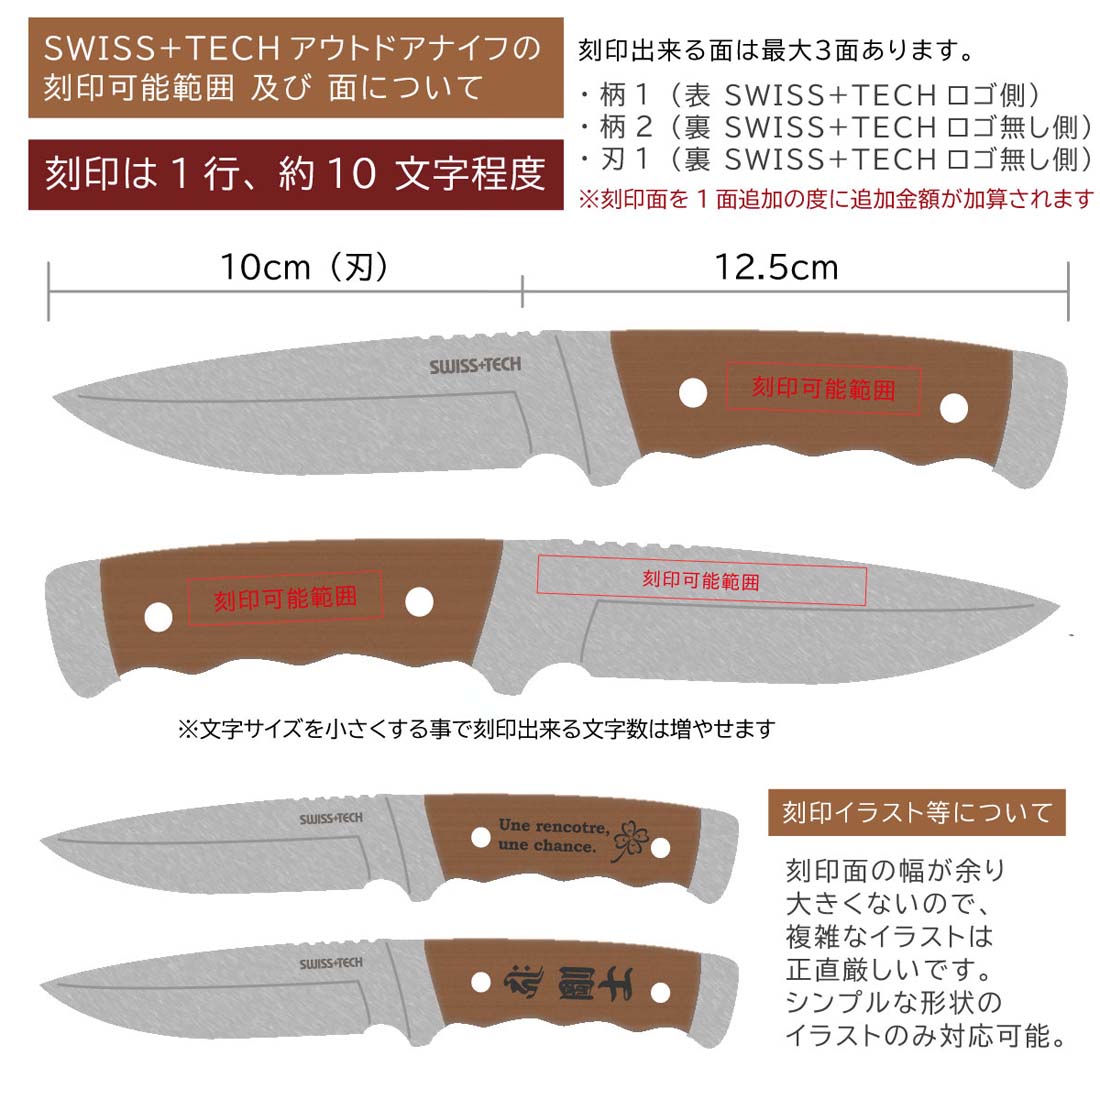 SWISS+TECH シースナイフ　刻印詳細